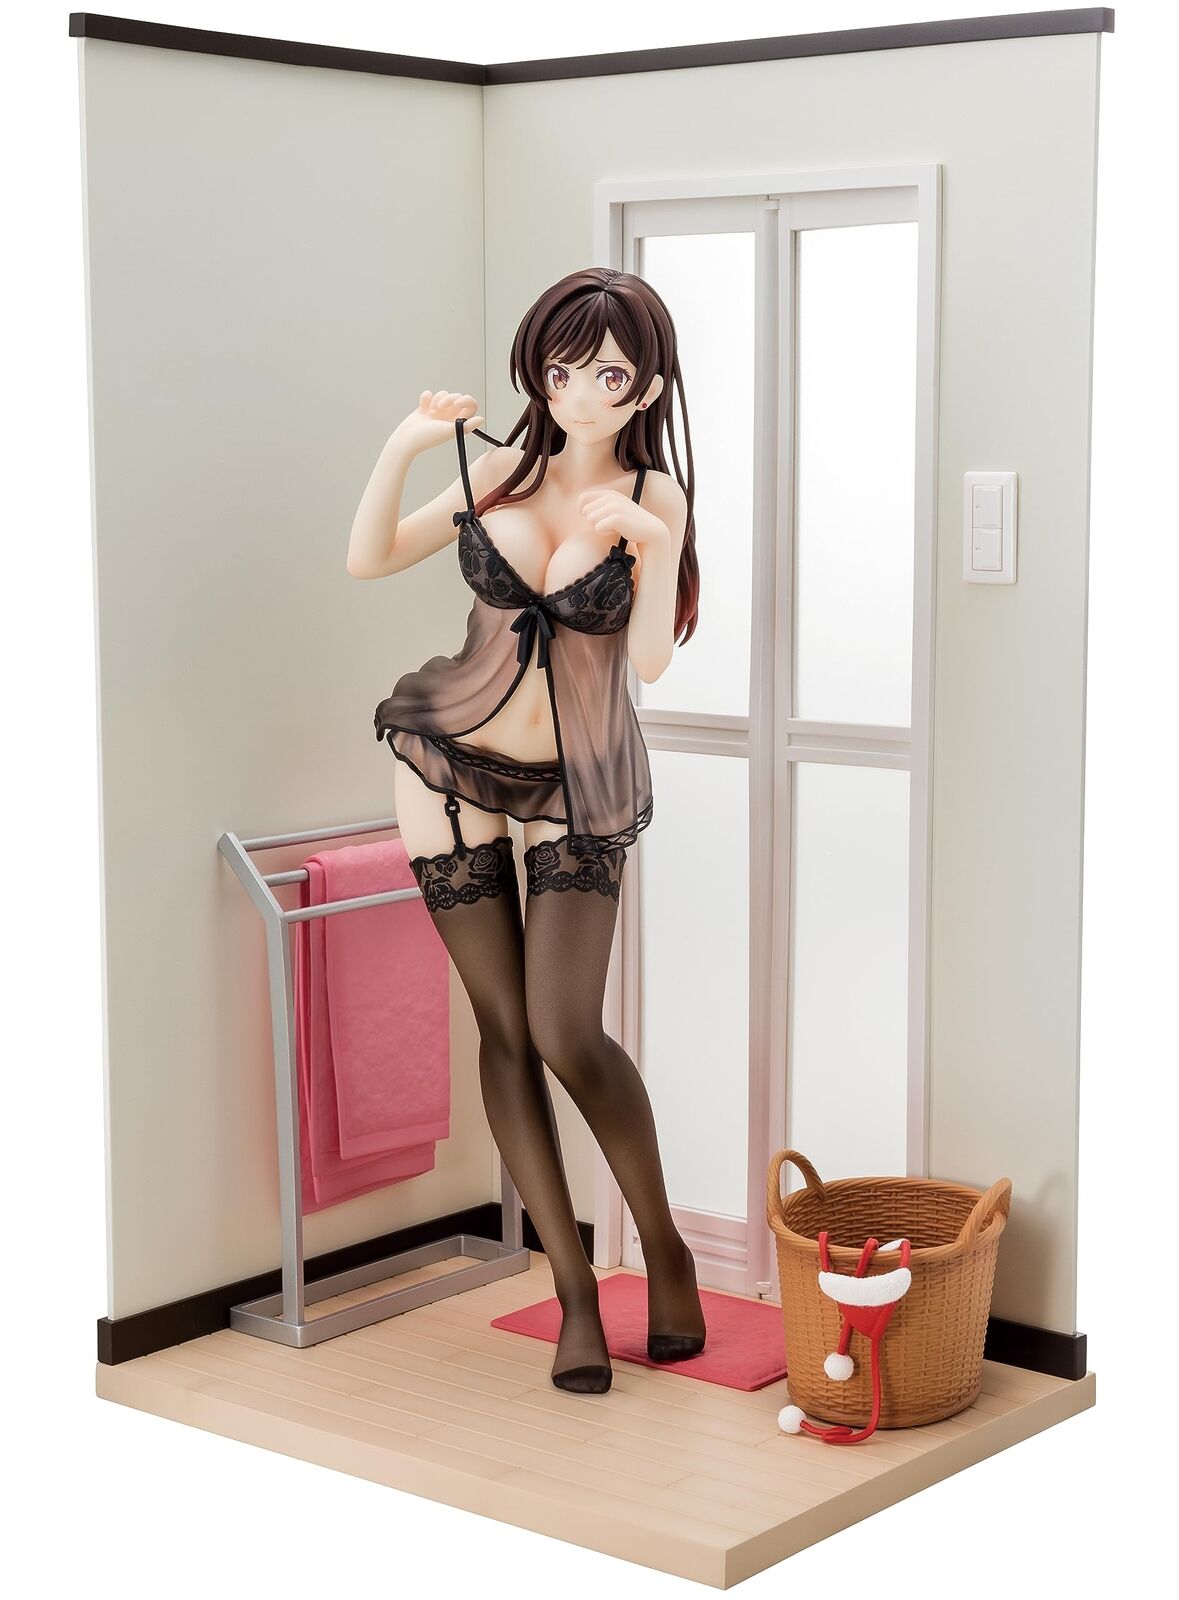 Rent-A-Girlfriend Chizuru Mizuhara See-through lingerie figure 1/6 scale painted